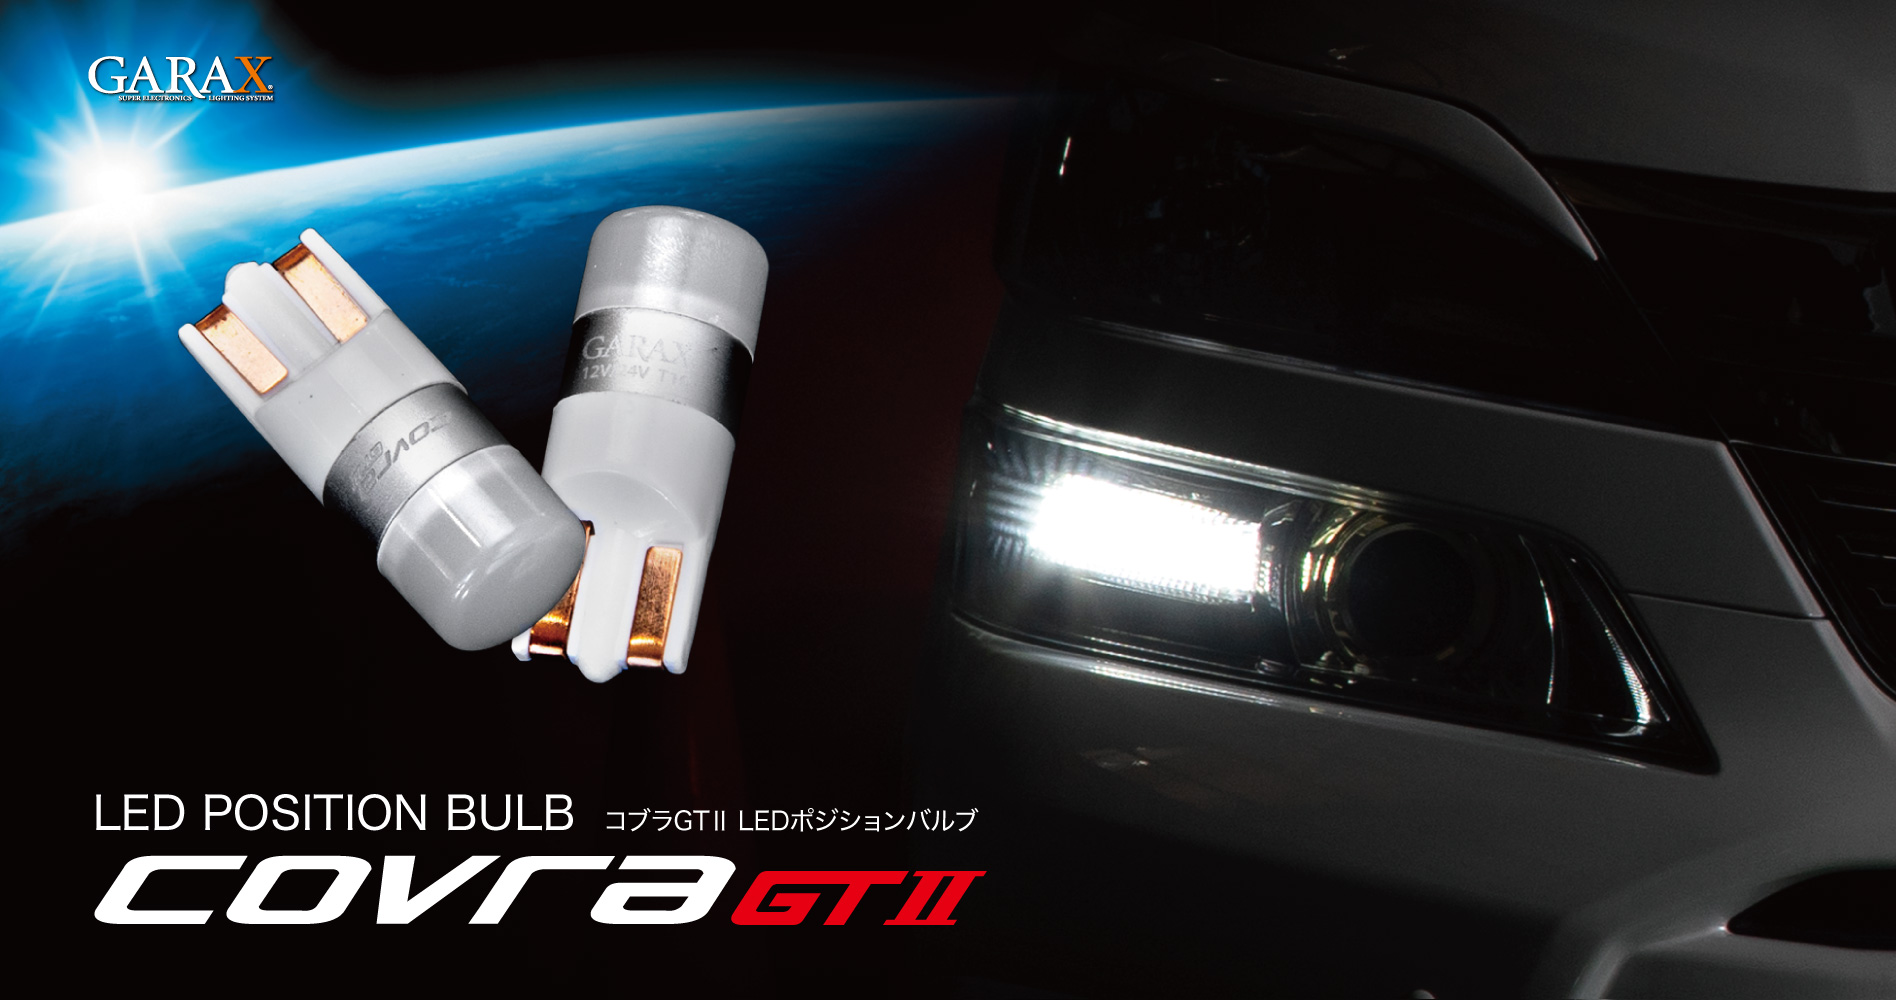 LED POSITION BULB COVRA GTⅡ | GARAX【ギャラクス】